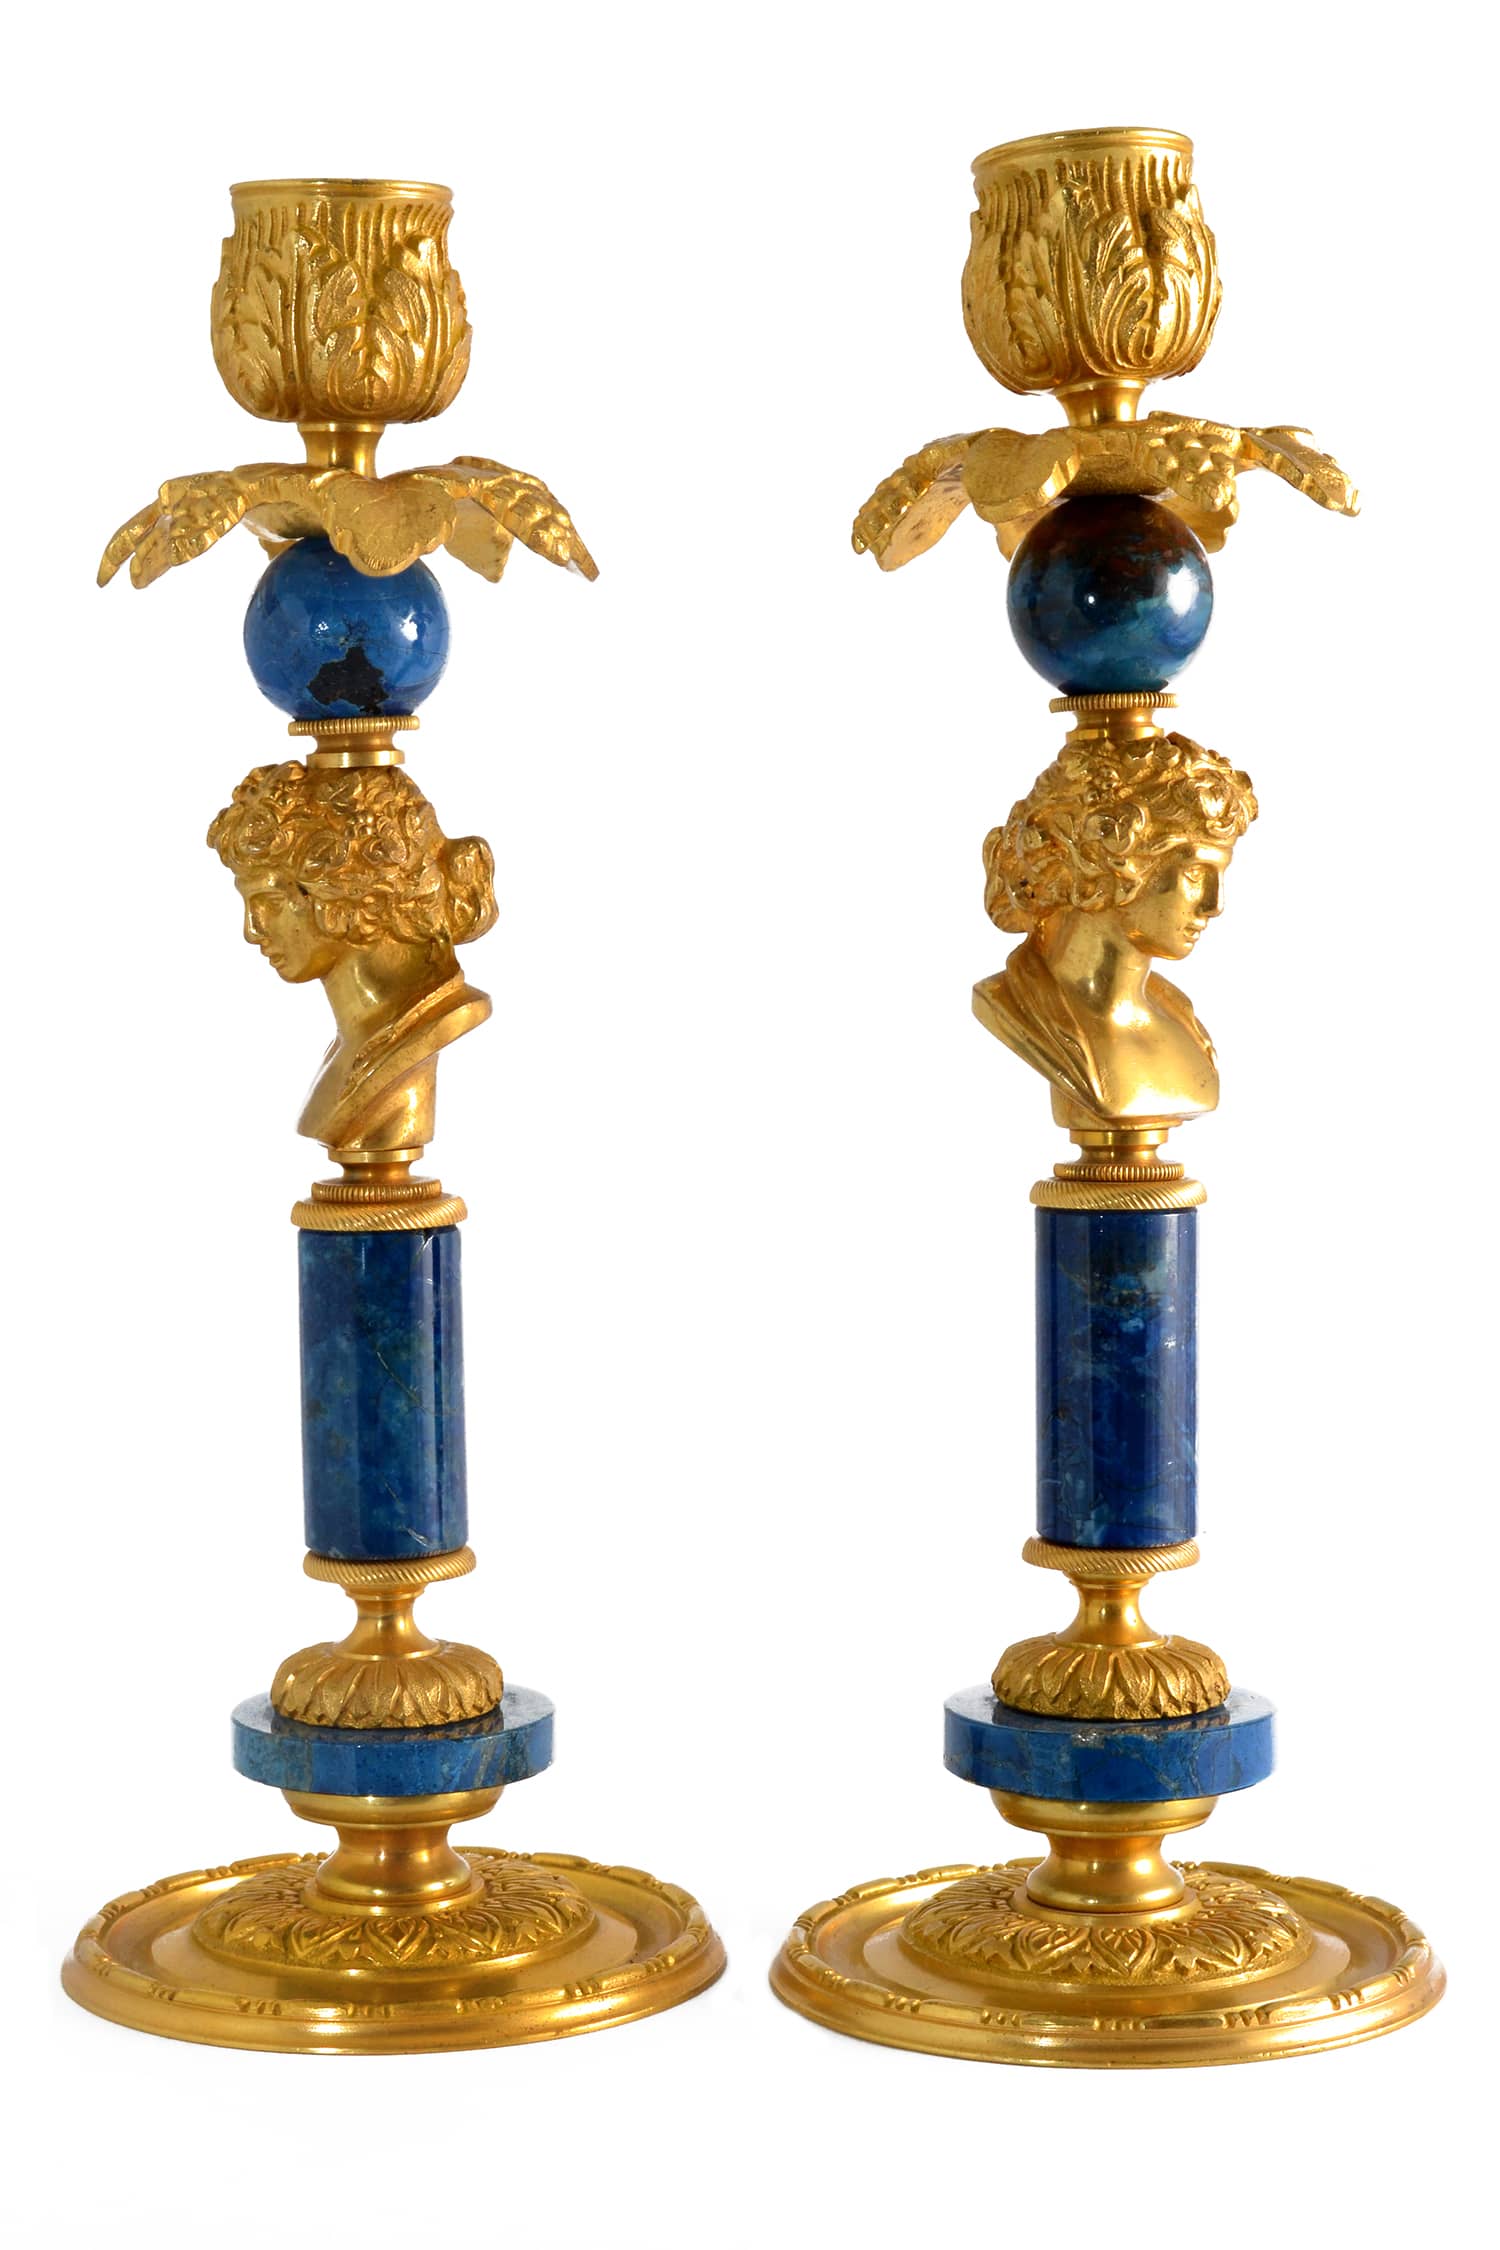 English regency gilt bronze candlesticks